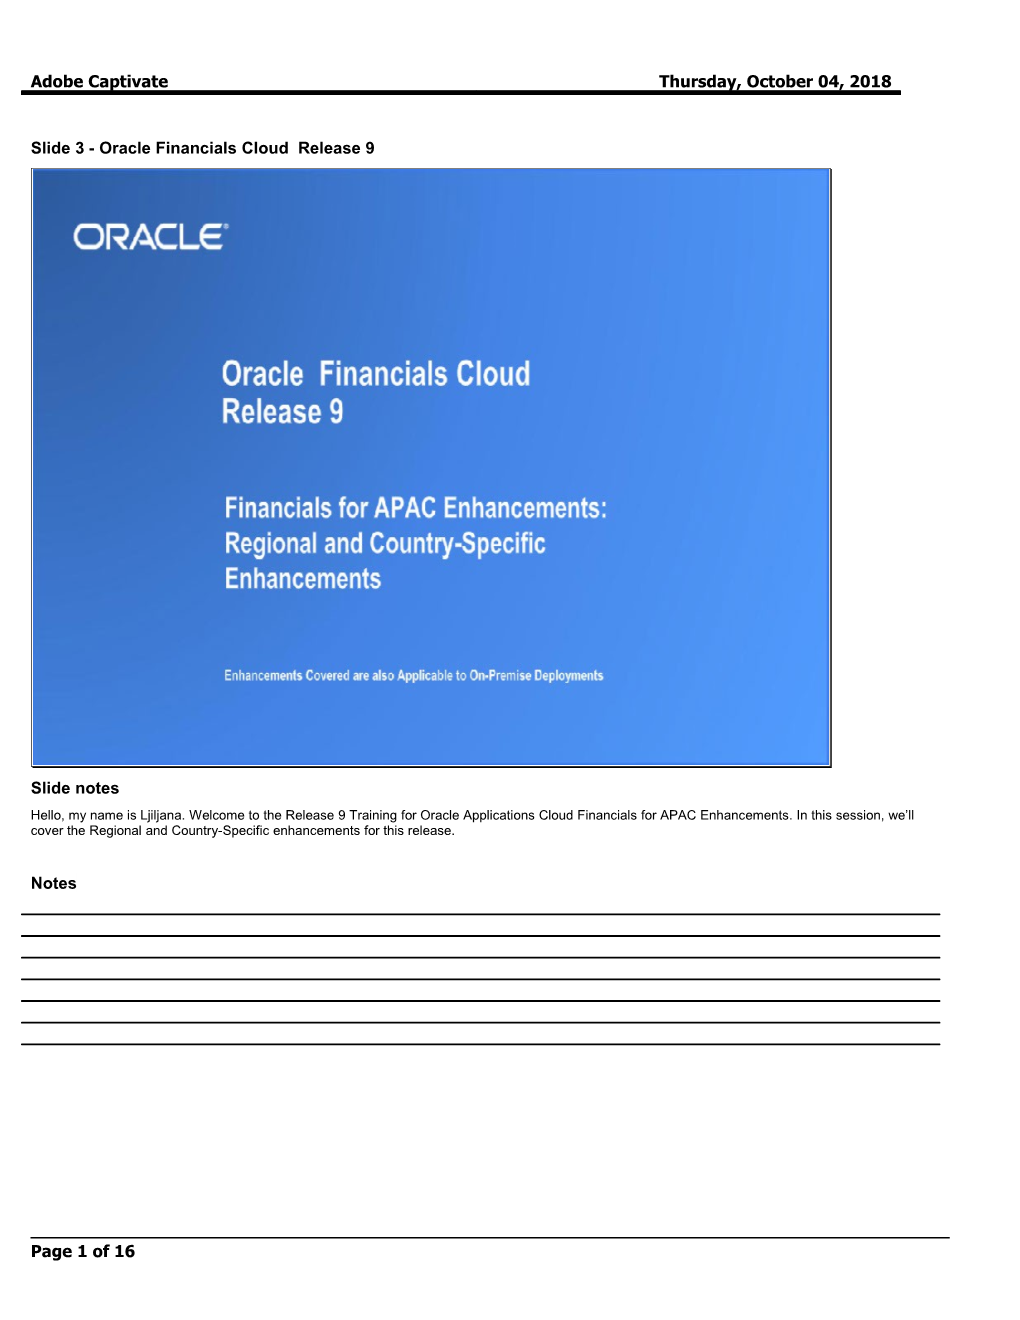 Slide 3 - Oracle Financials Cloud Release 9